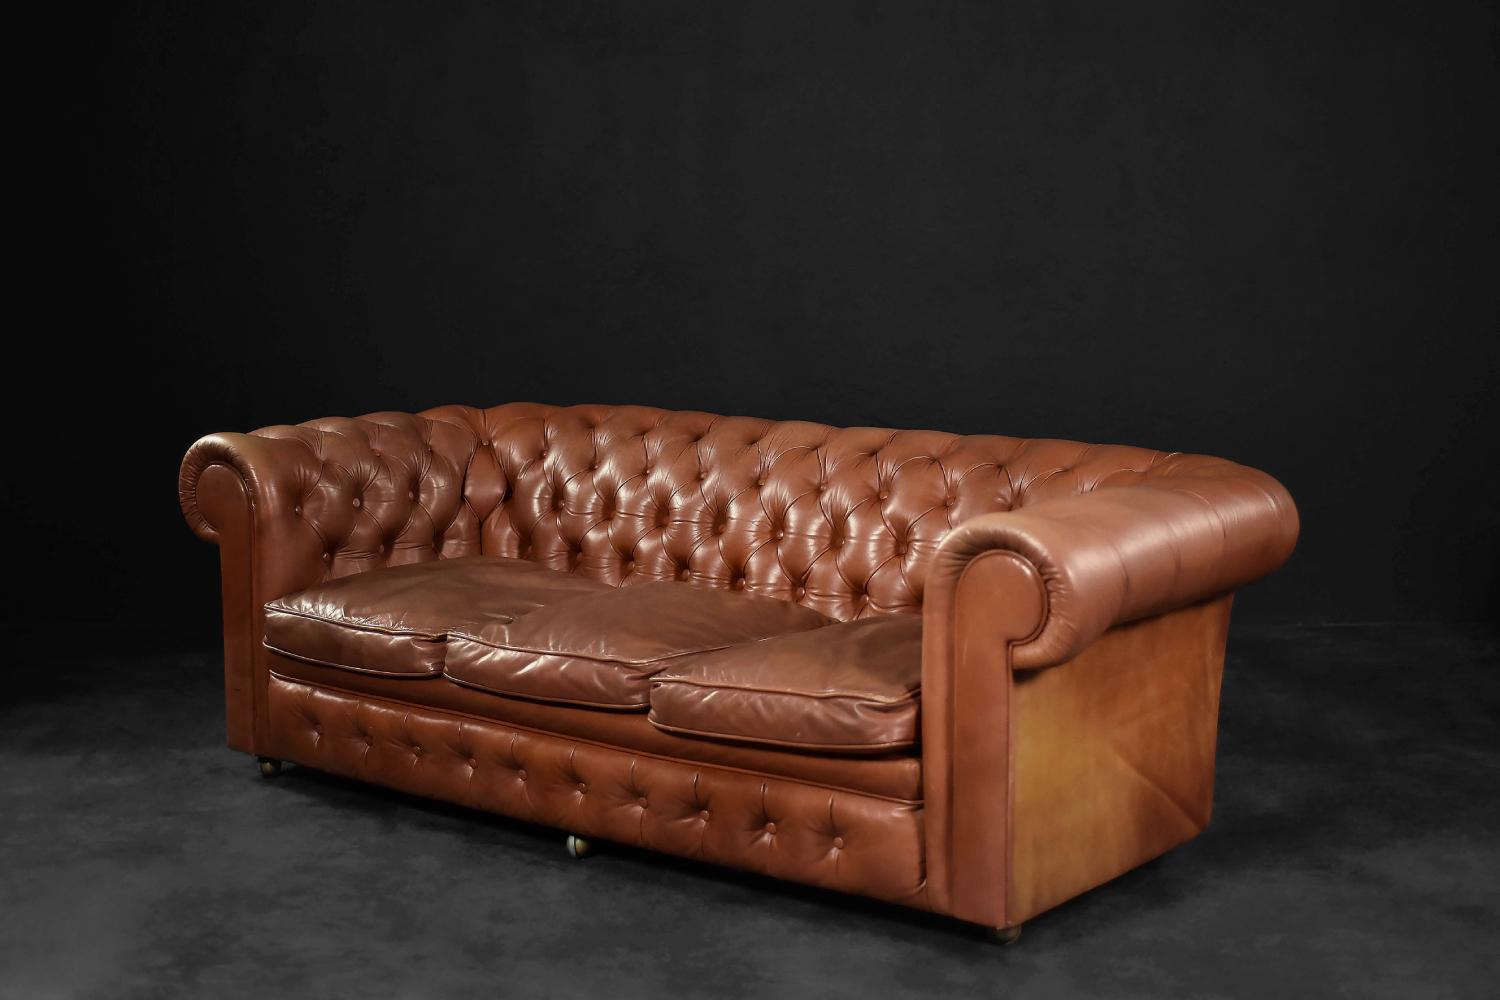 British Original English Large Leather Chesterfield Sofa with Shepherd Wheels 